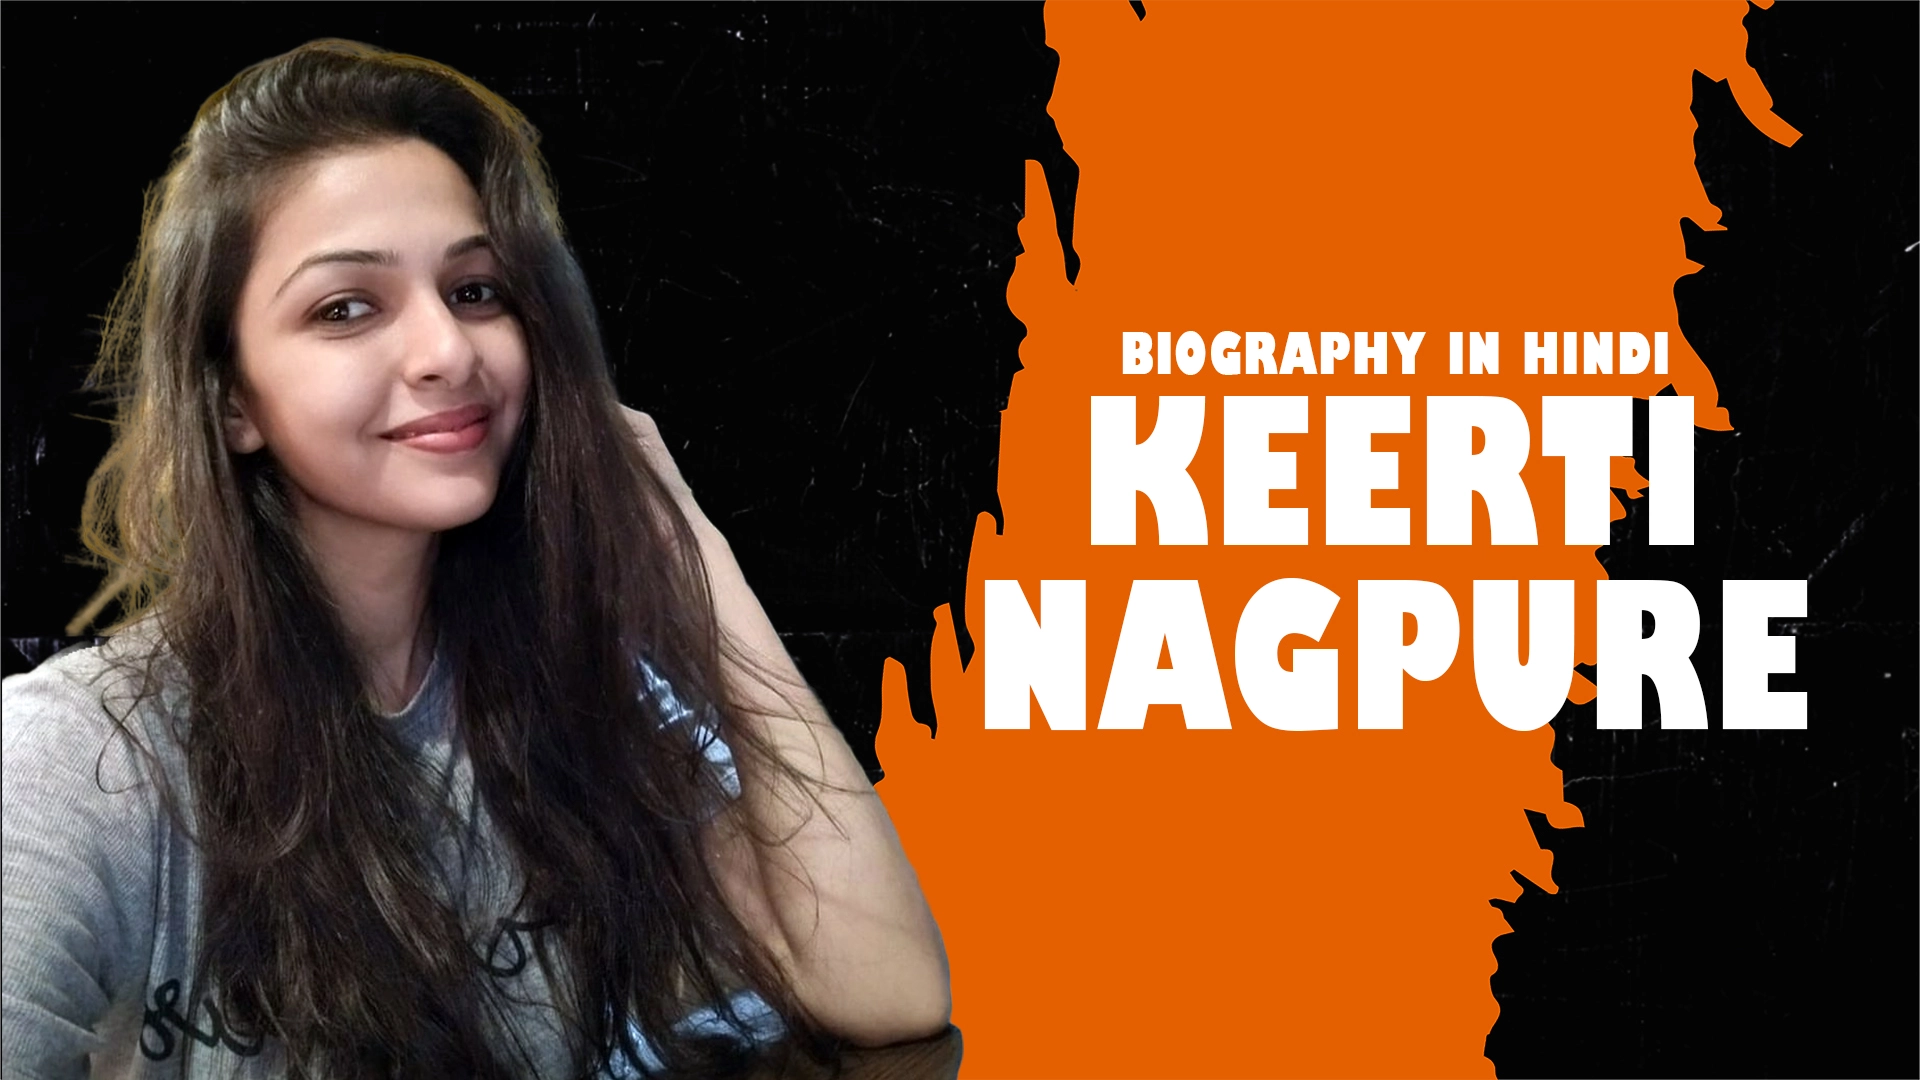 Keerti Nagpure Biography in Hindi